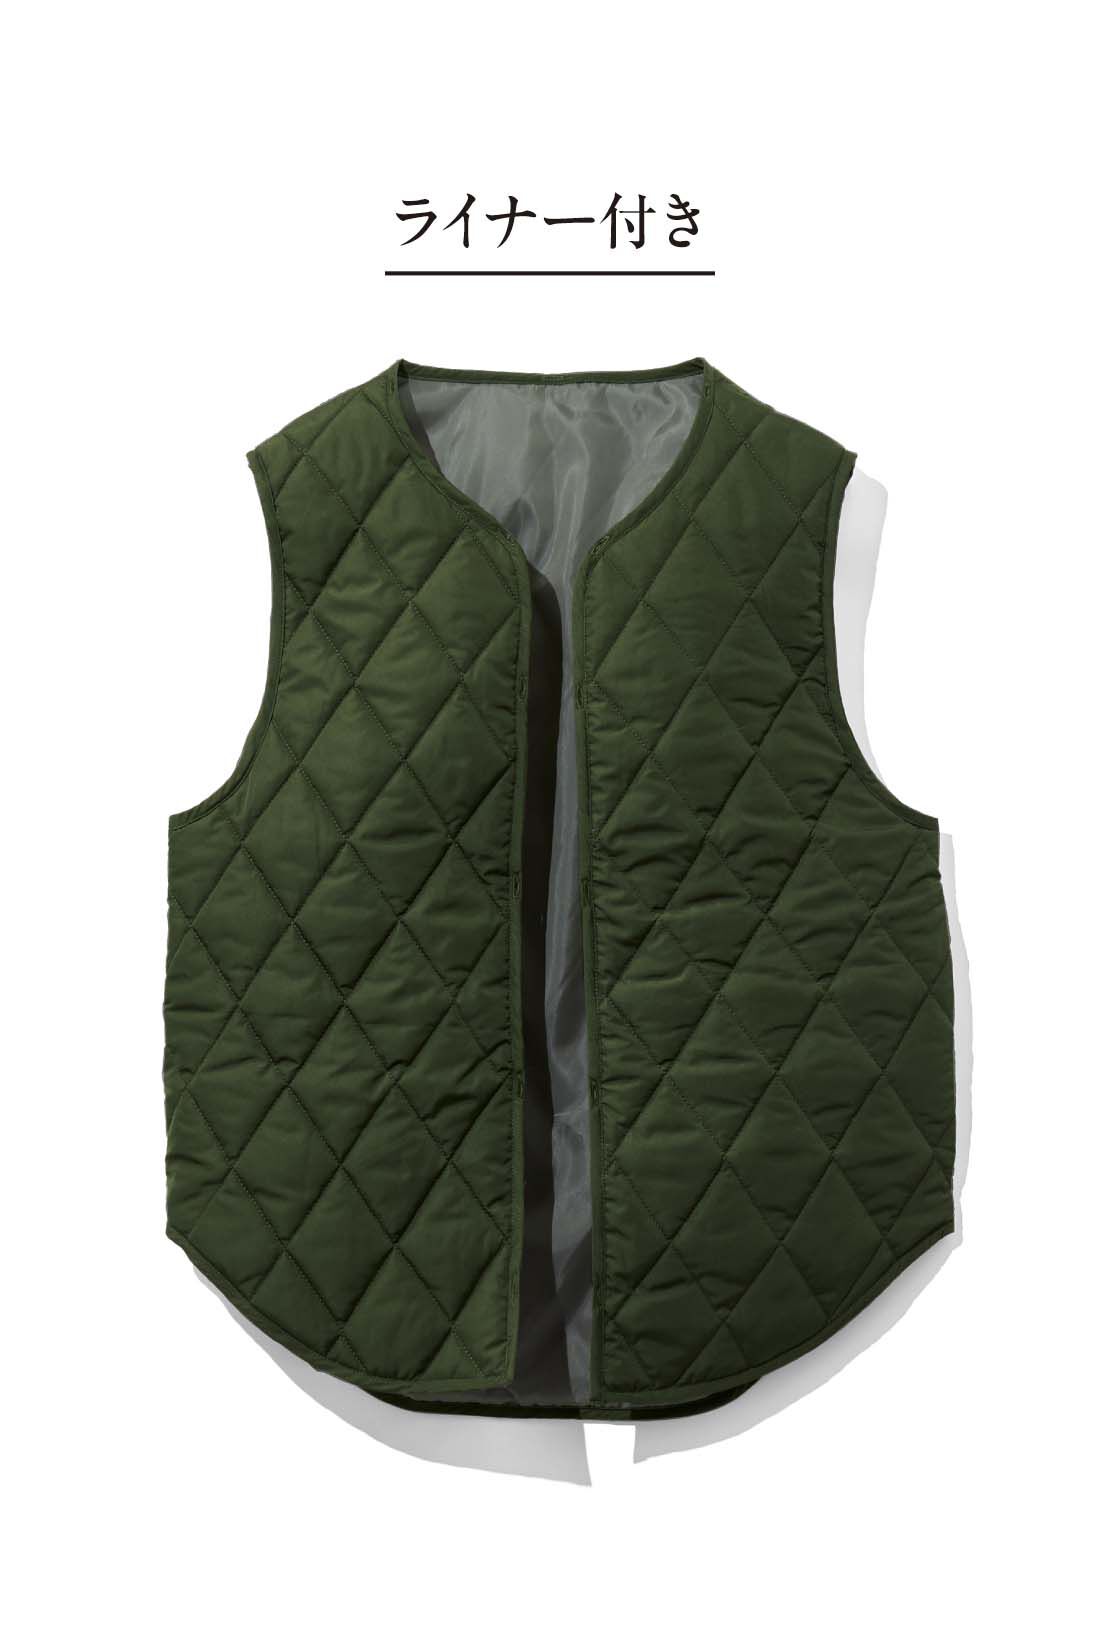 DRECO by IEDIT|IEDIT[イディット]　上品カジュアルが叶うポンチョ風デザインの着まわし便利なモッズコート〈カーキグリーン〉